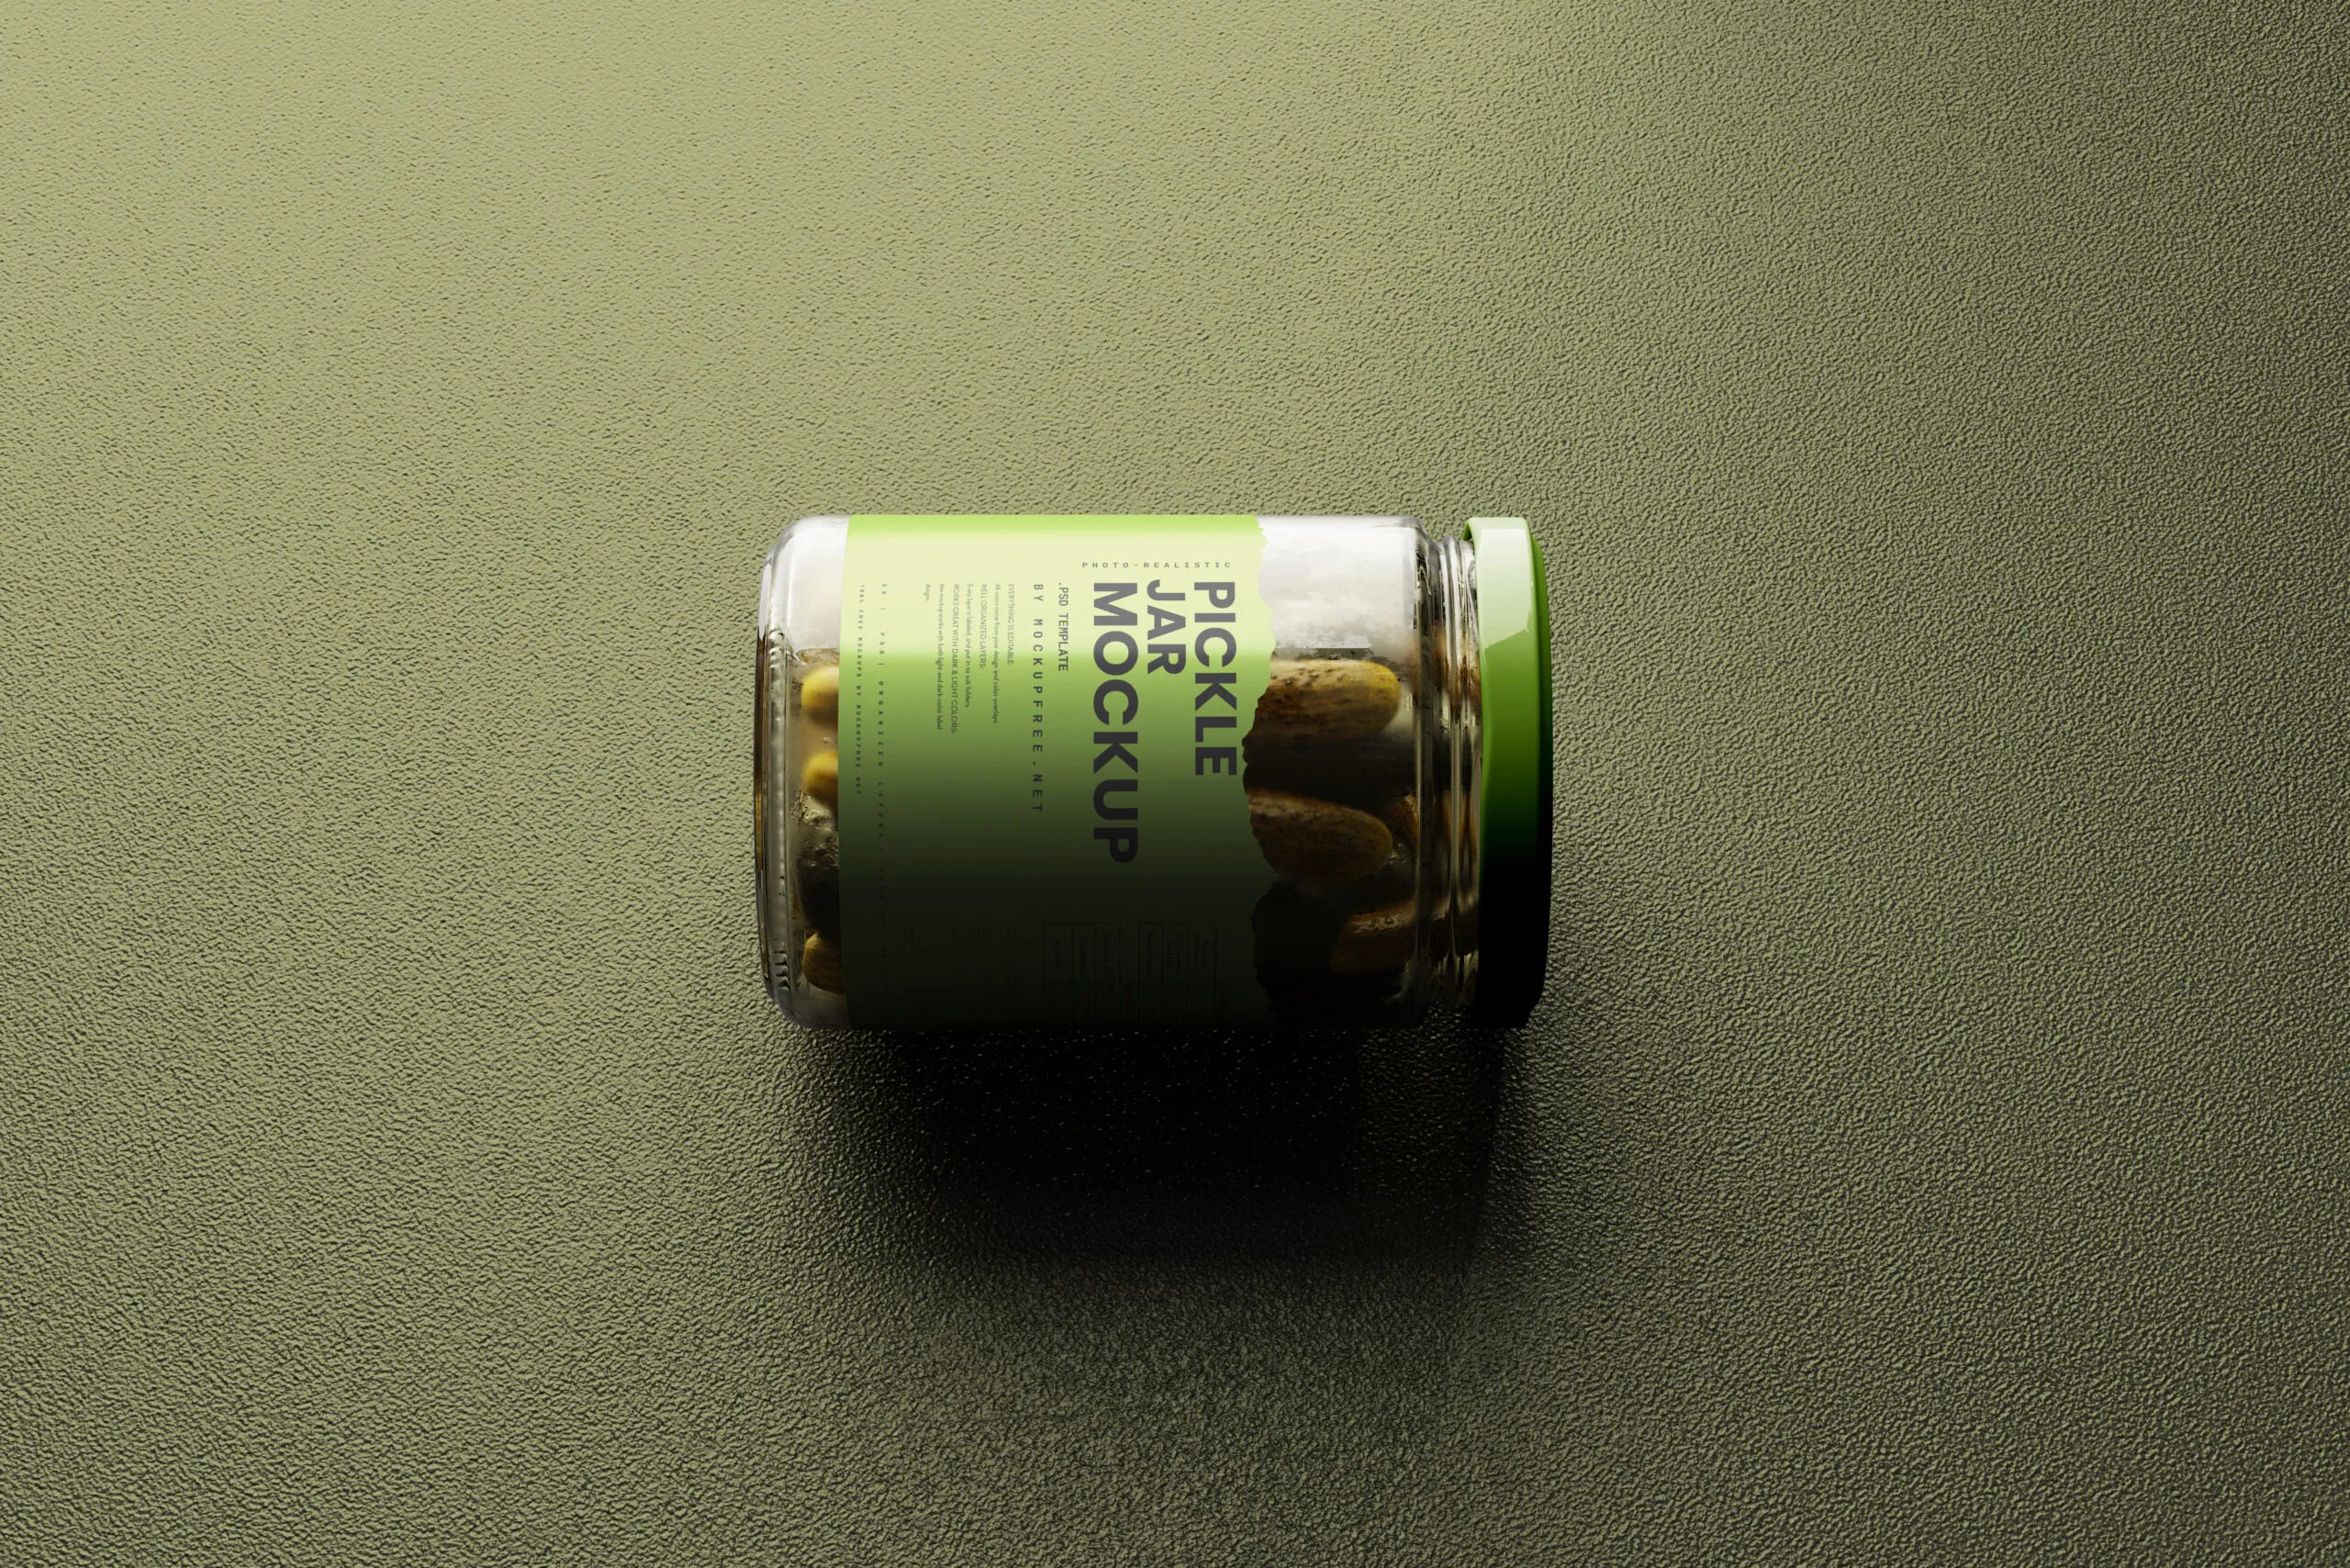 5 Mockups of Pickle Jar in Distinct Visions FREE PSD